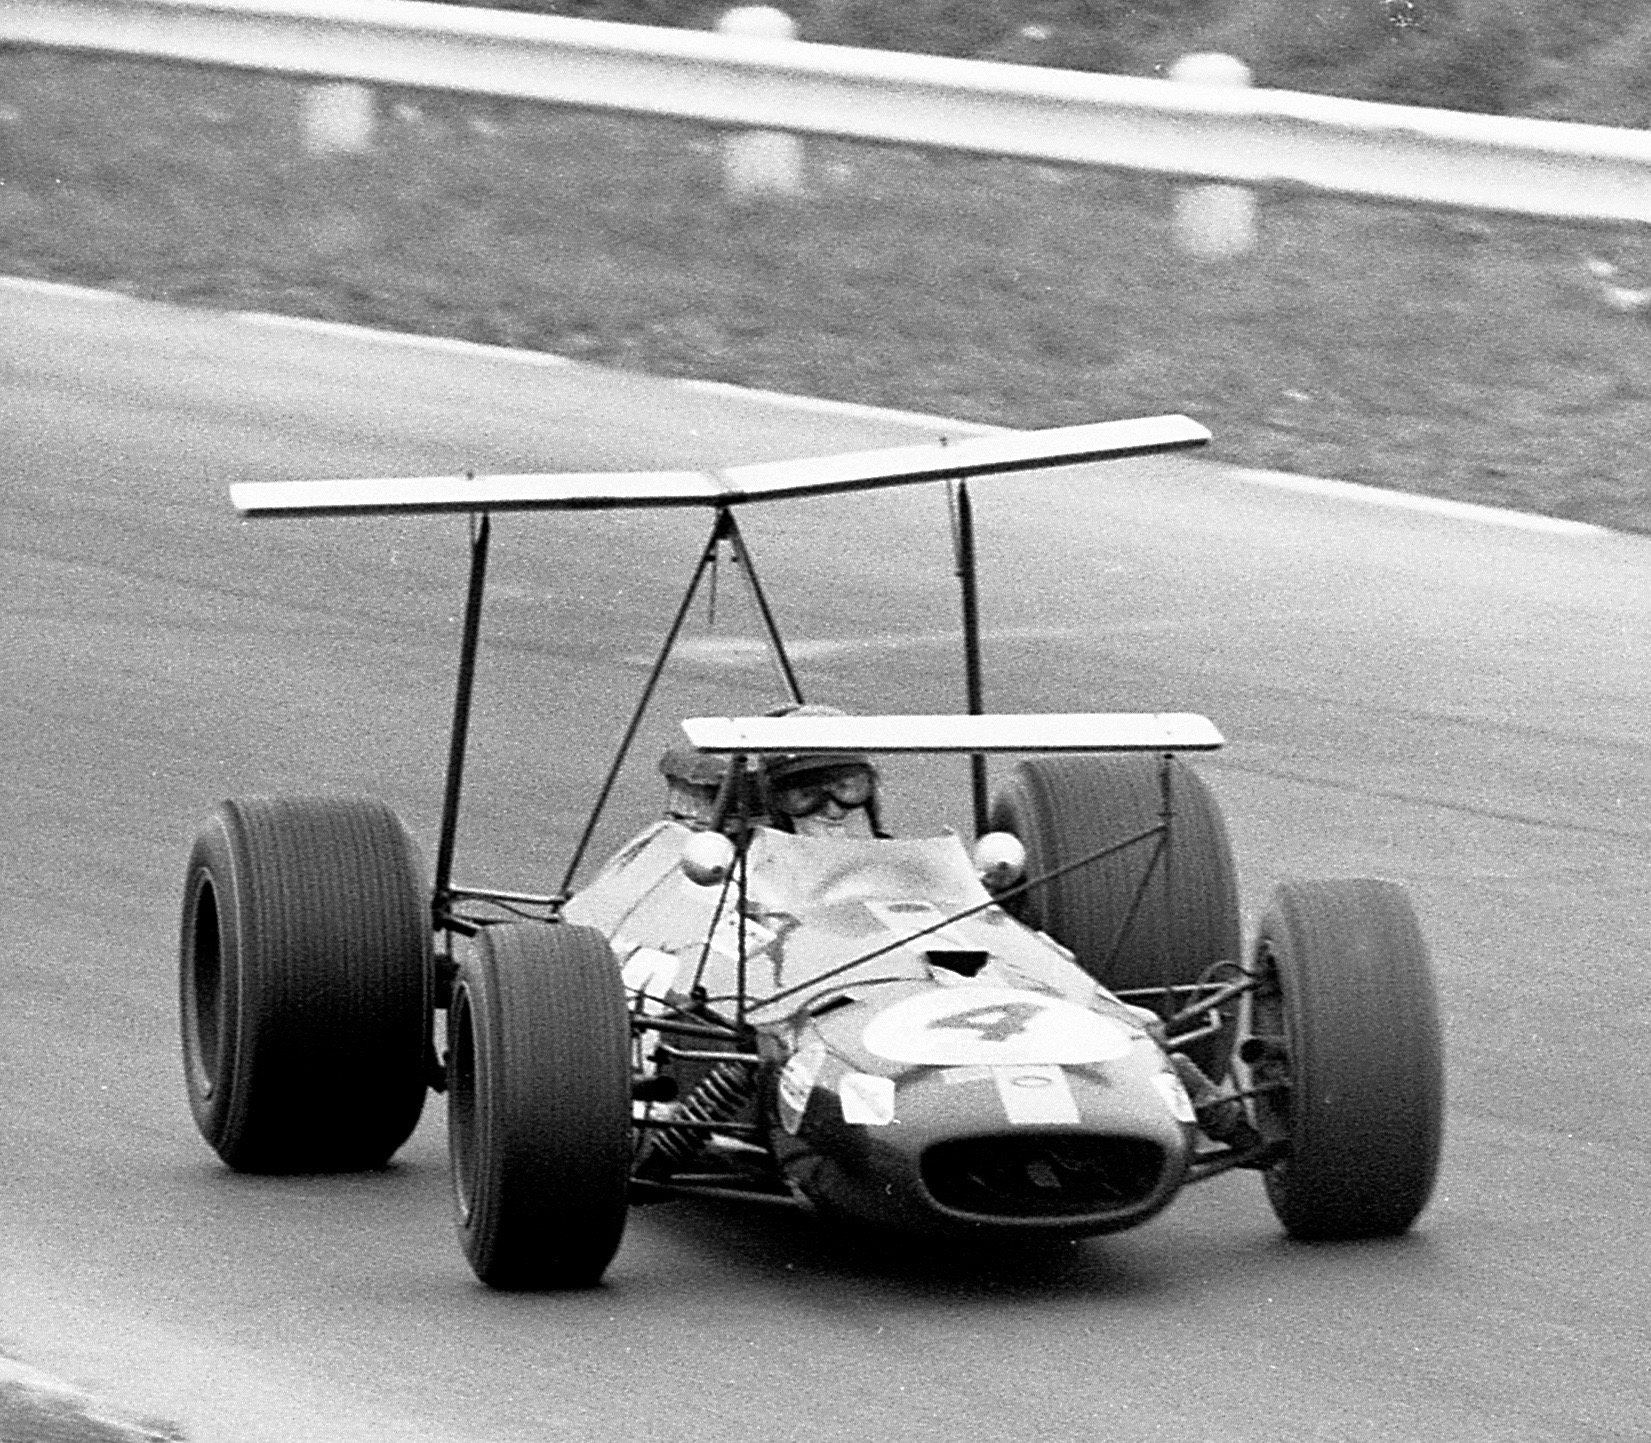 Brabham, Ickx, Rindt-driven Brabham F1 car on Bonhams’ Amelia Island docket, ClassicCars.com Journal